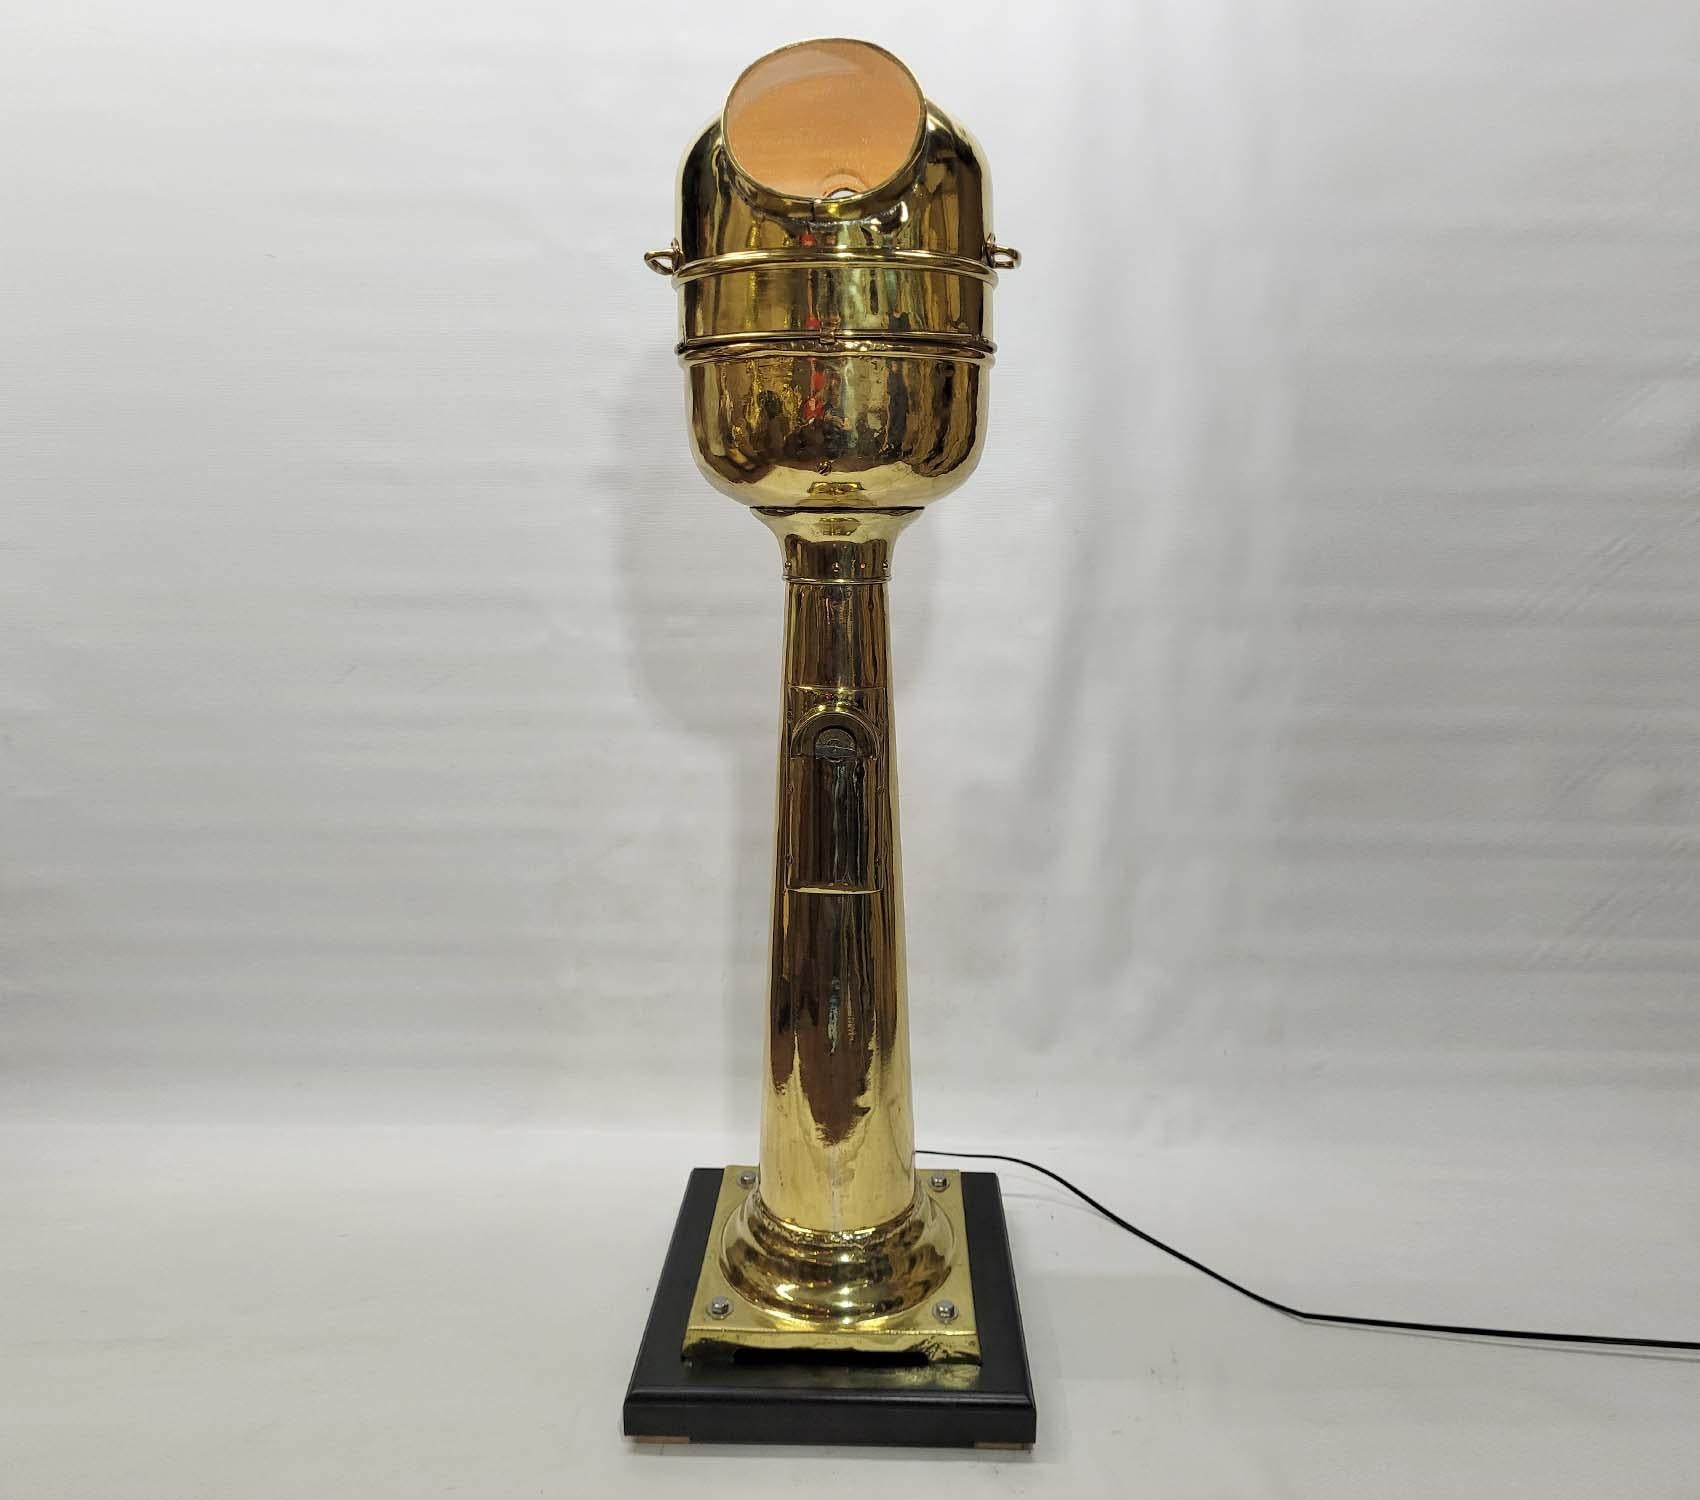 North American Pedestal Binnacle by Kelvin Bottomley and Baird LTD For Sale